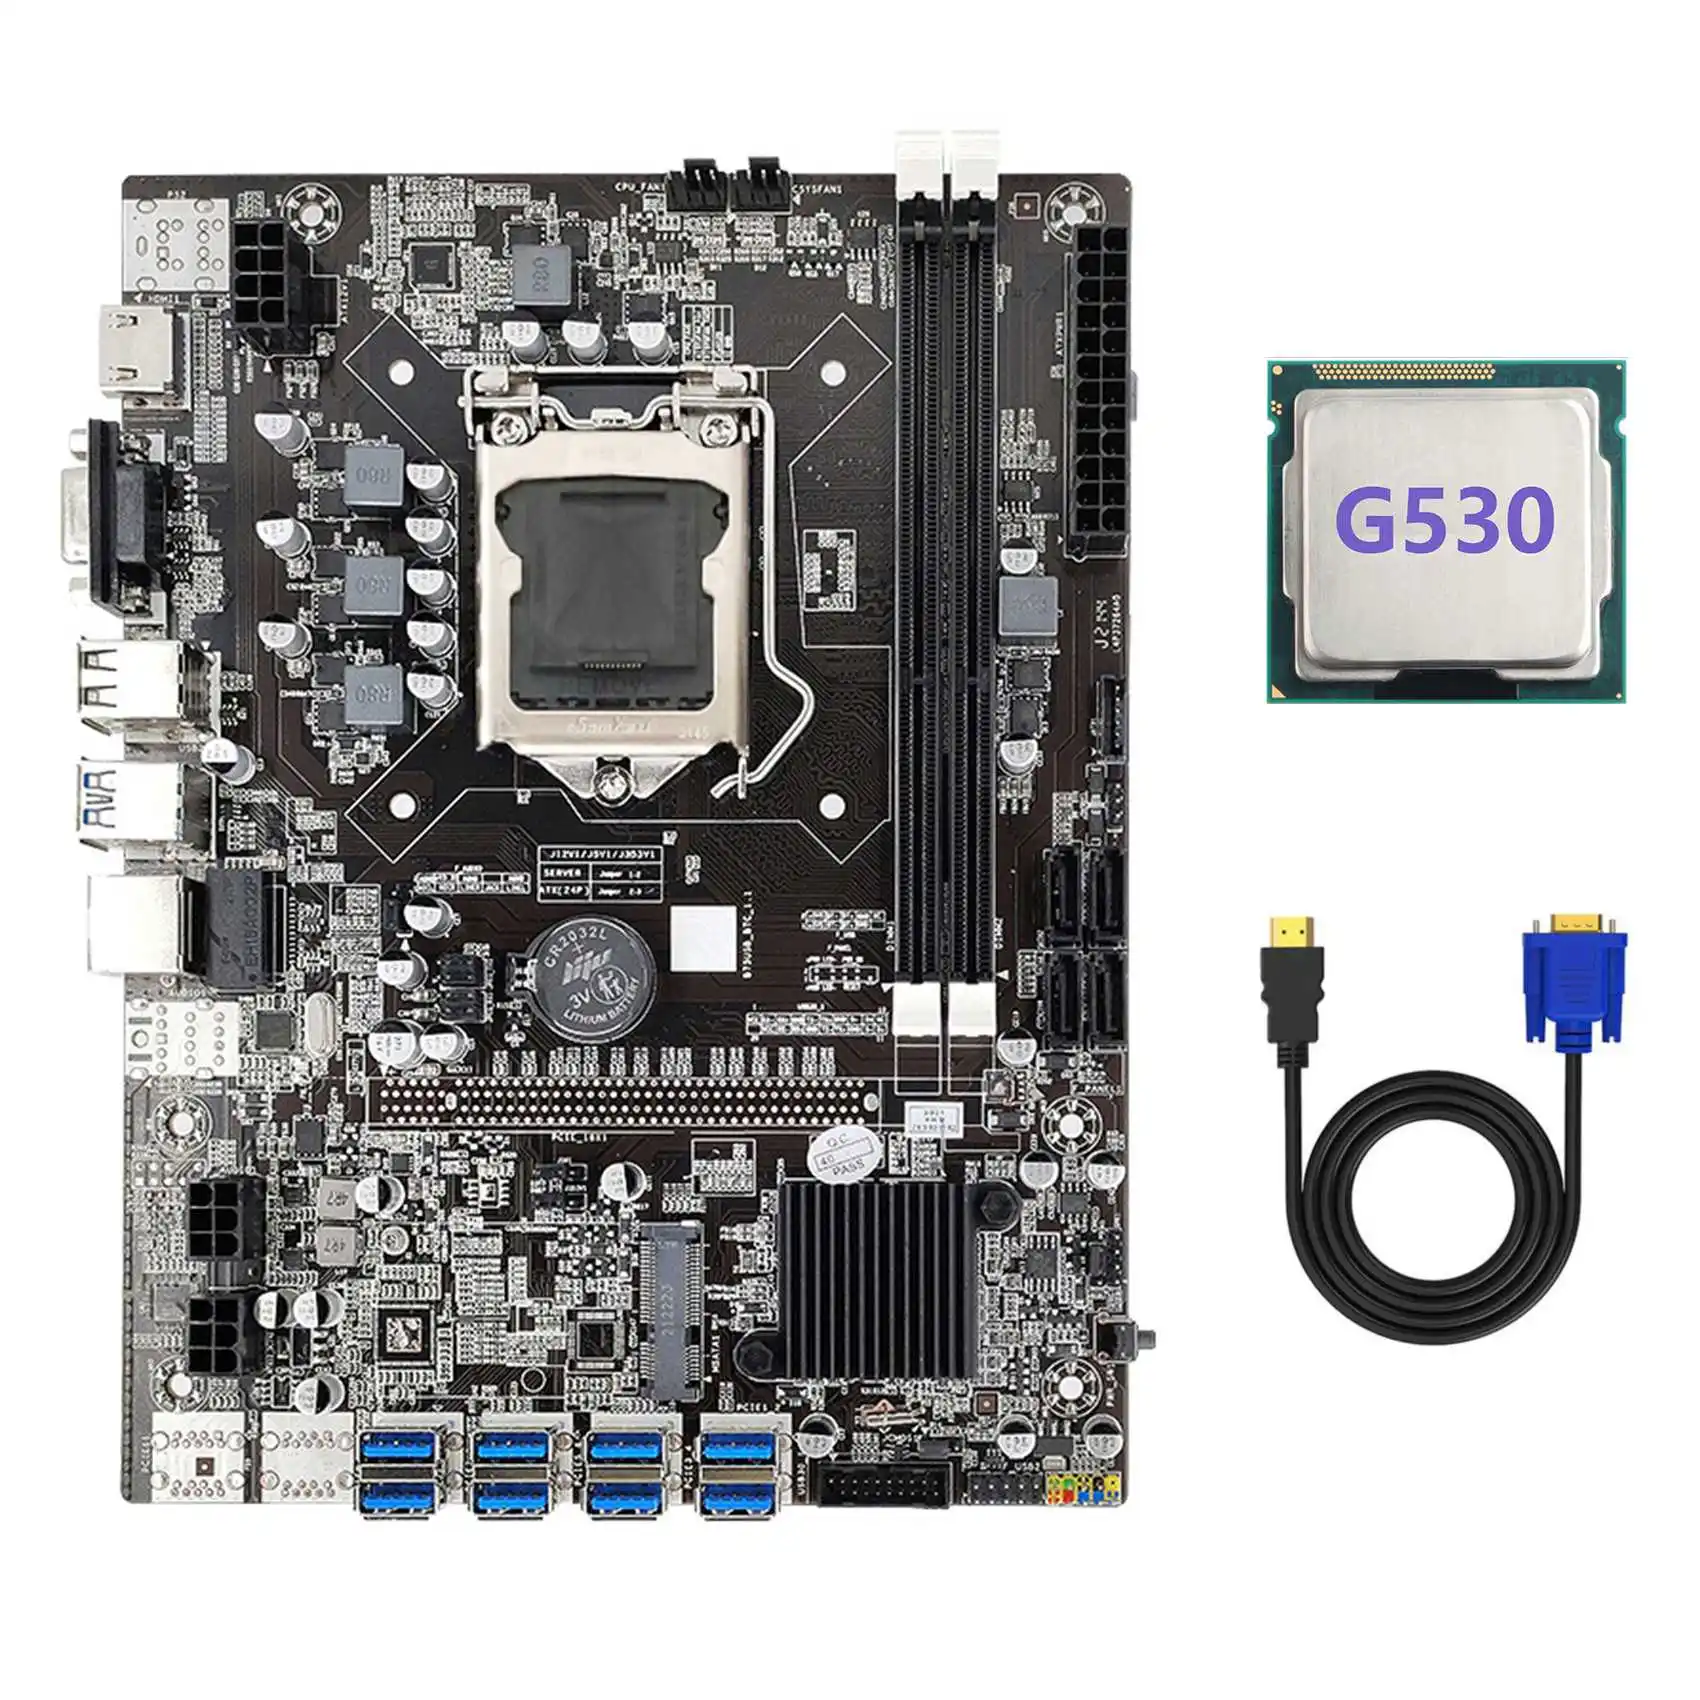 B75 ETH Mining Motherboard 8XPCIE USB Adapter+G530 CPU+HD to VGA Cable LGA1155 MSATA DDR3 B75 USB Miner Motherboard